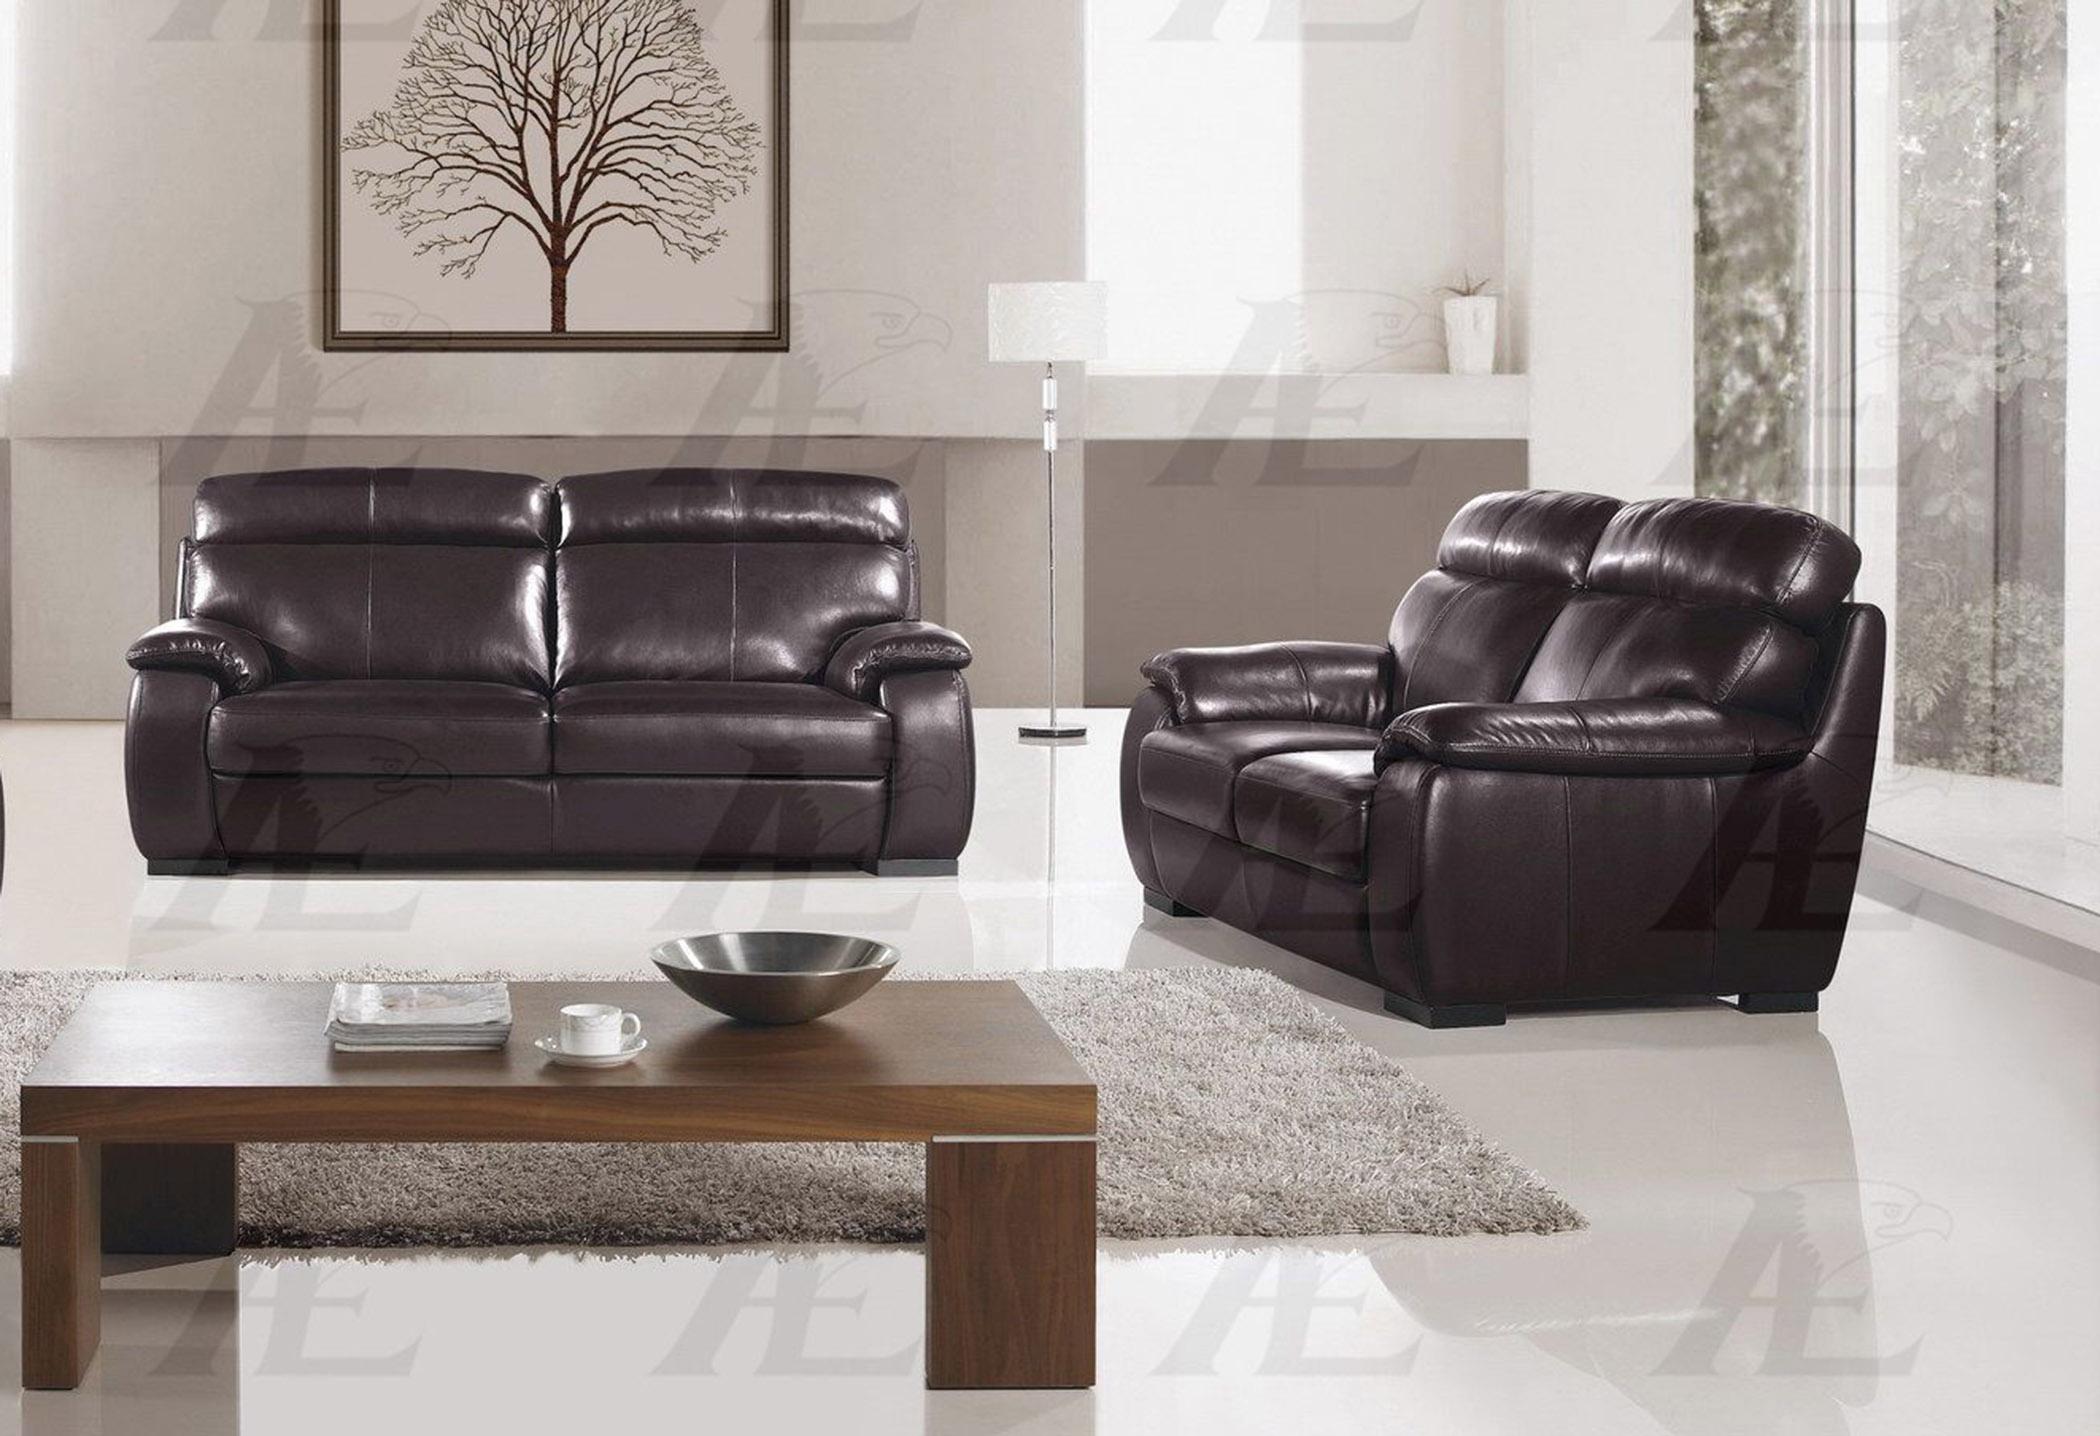 

    
American Eagle Furniture EK011-DB Dark Chocolate  Sofa Loveseat Set Italian Leather 2Pcs
